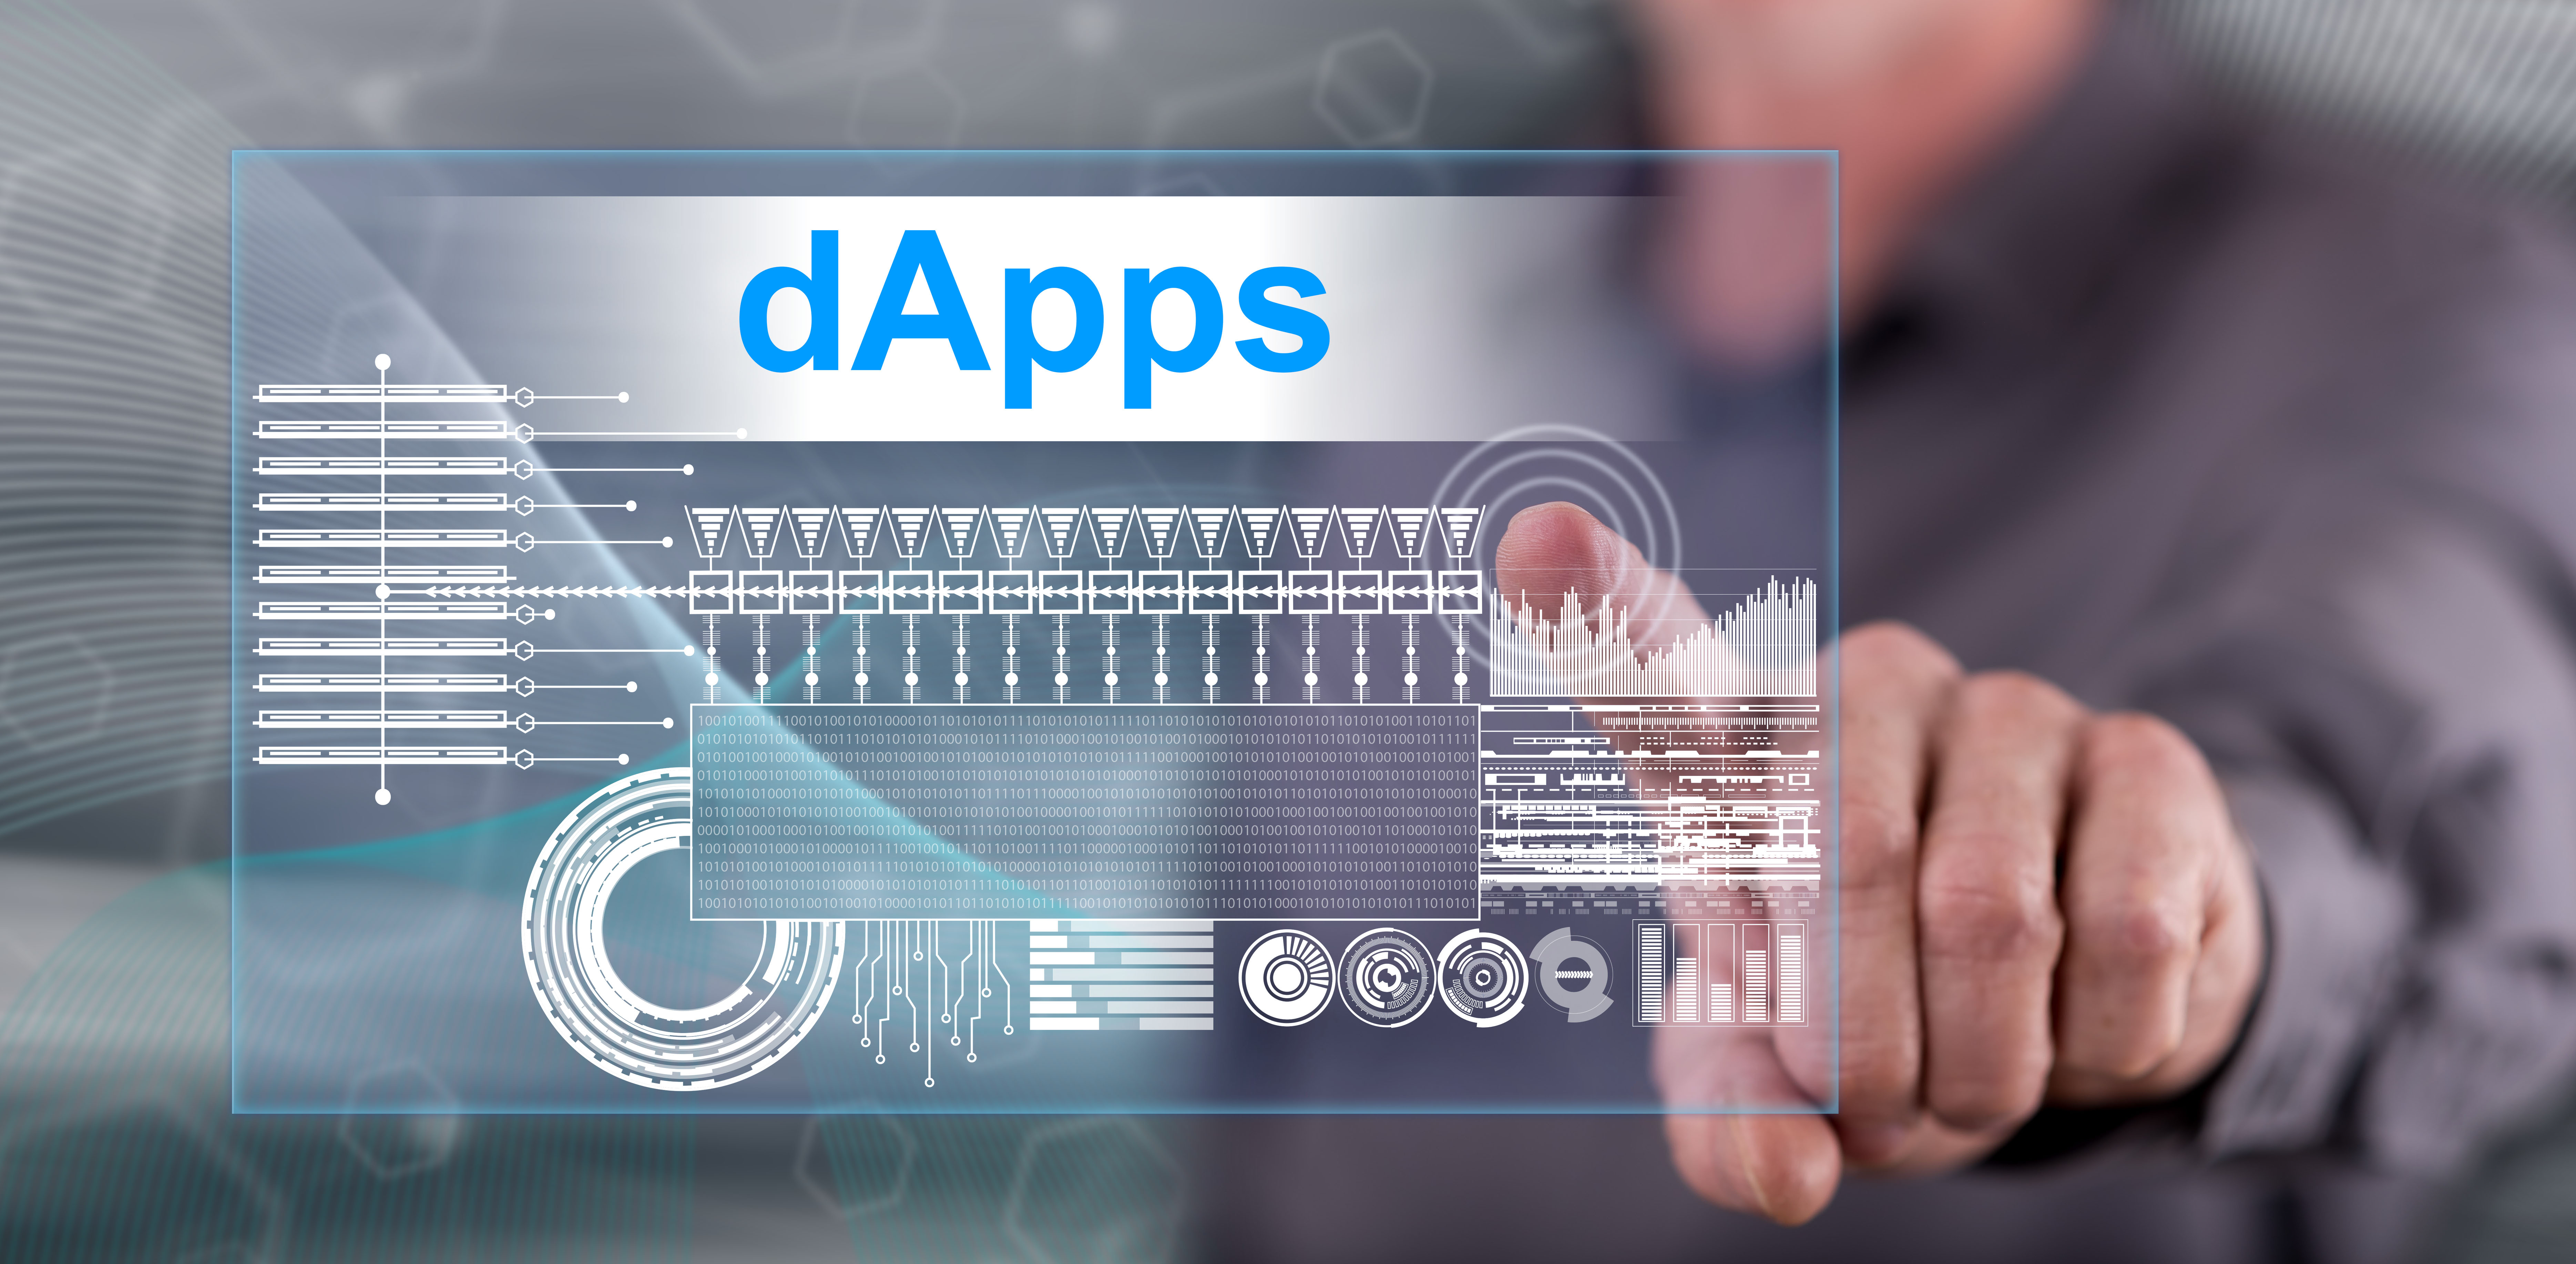 DappRadar Expands Beyond Original B2C Model With Worldwide Decentralized Application Store